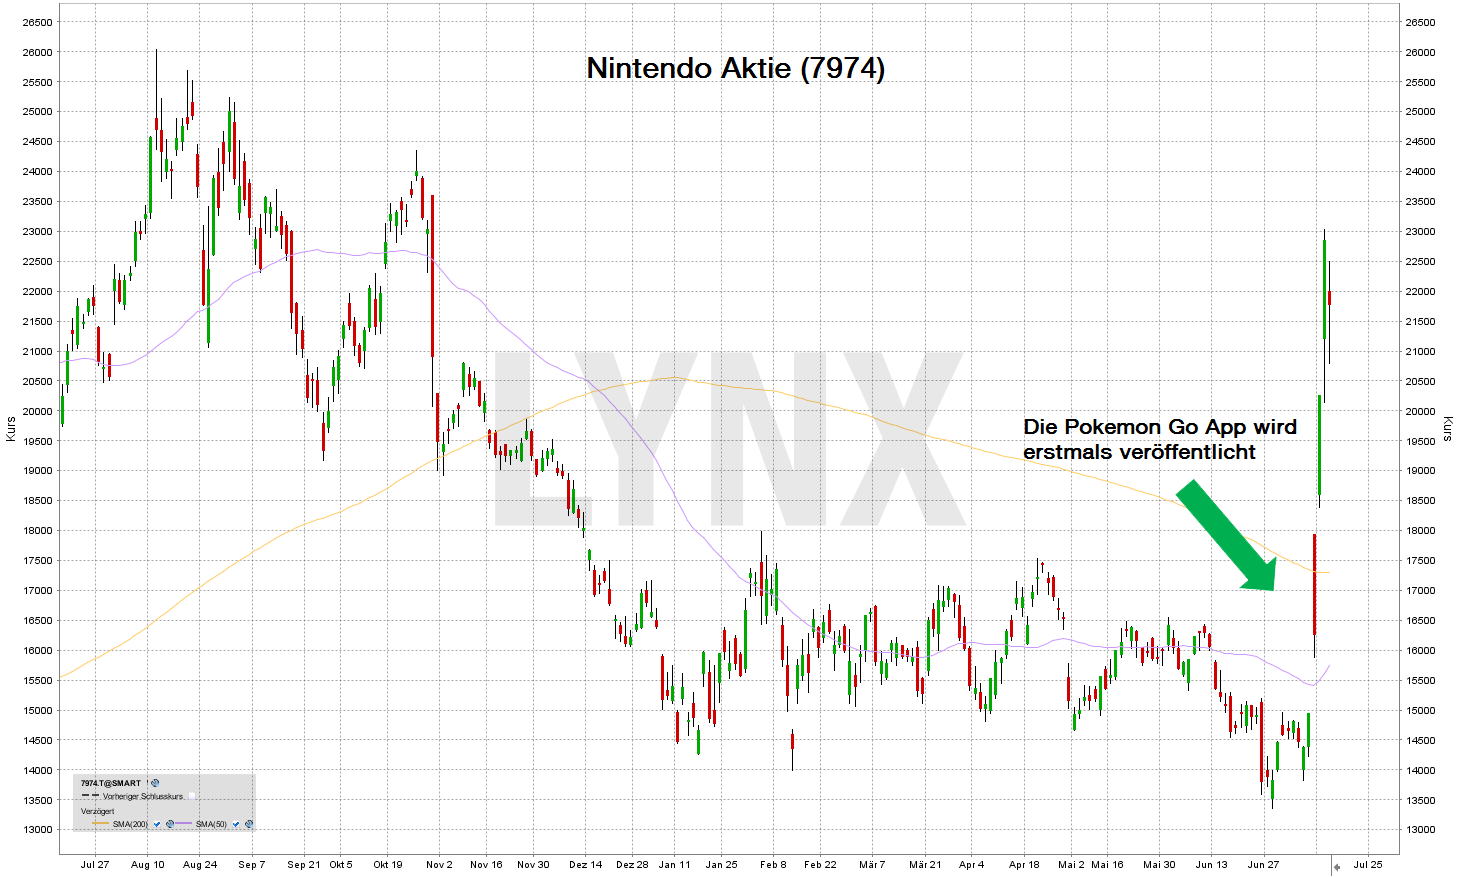 20160714-chart-nintendo-aktie-lynx-broker